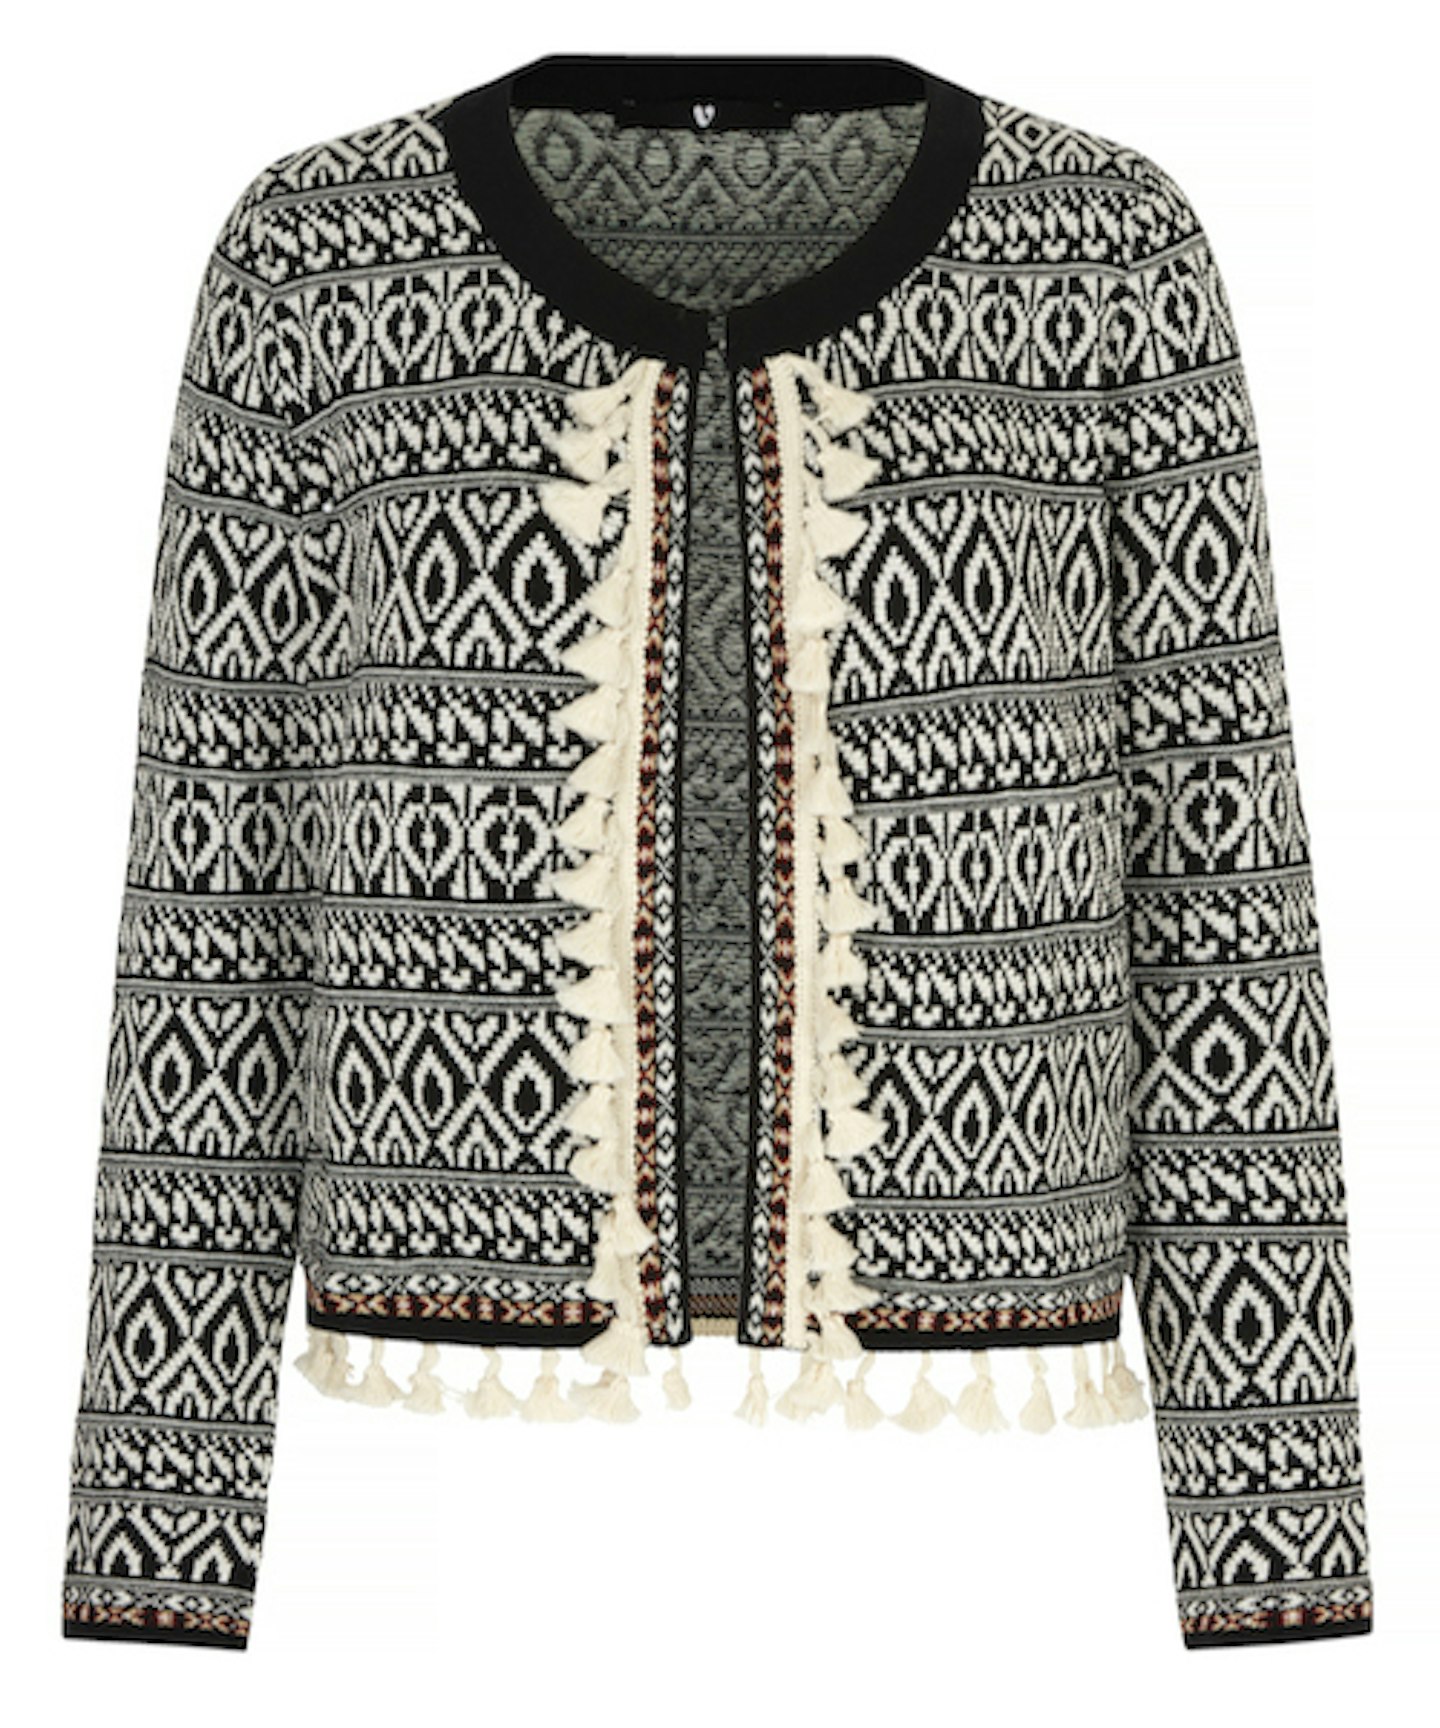 Tassel knitted jacket £30